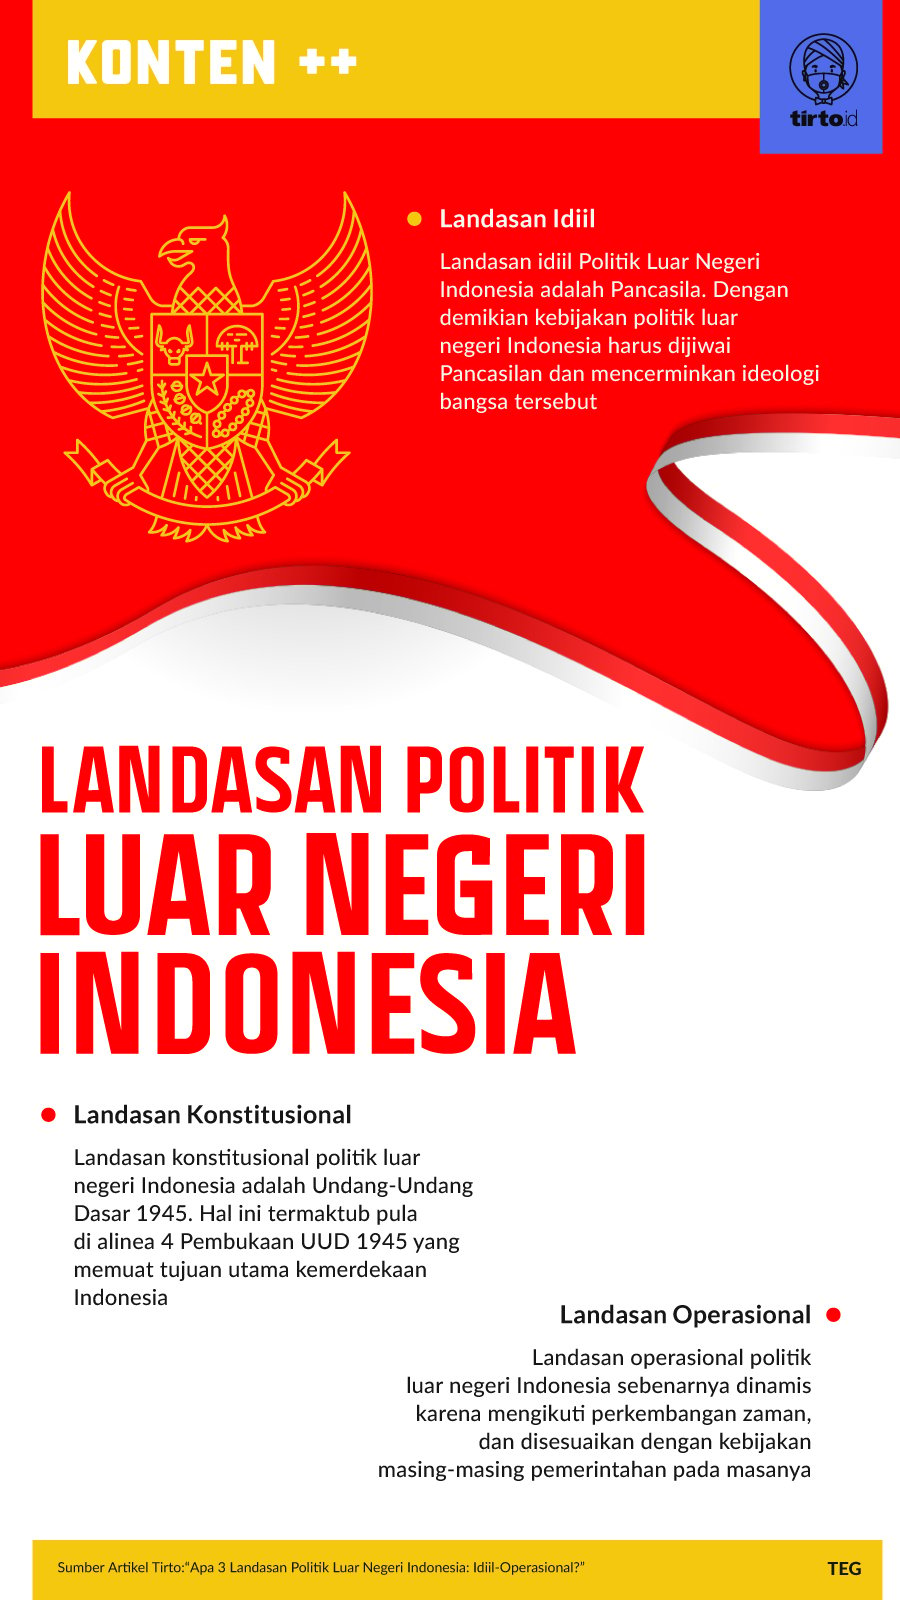 Bagi bangsa indonesia, politik luar negeri merupakan penjabaran dari